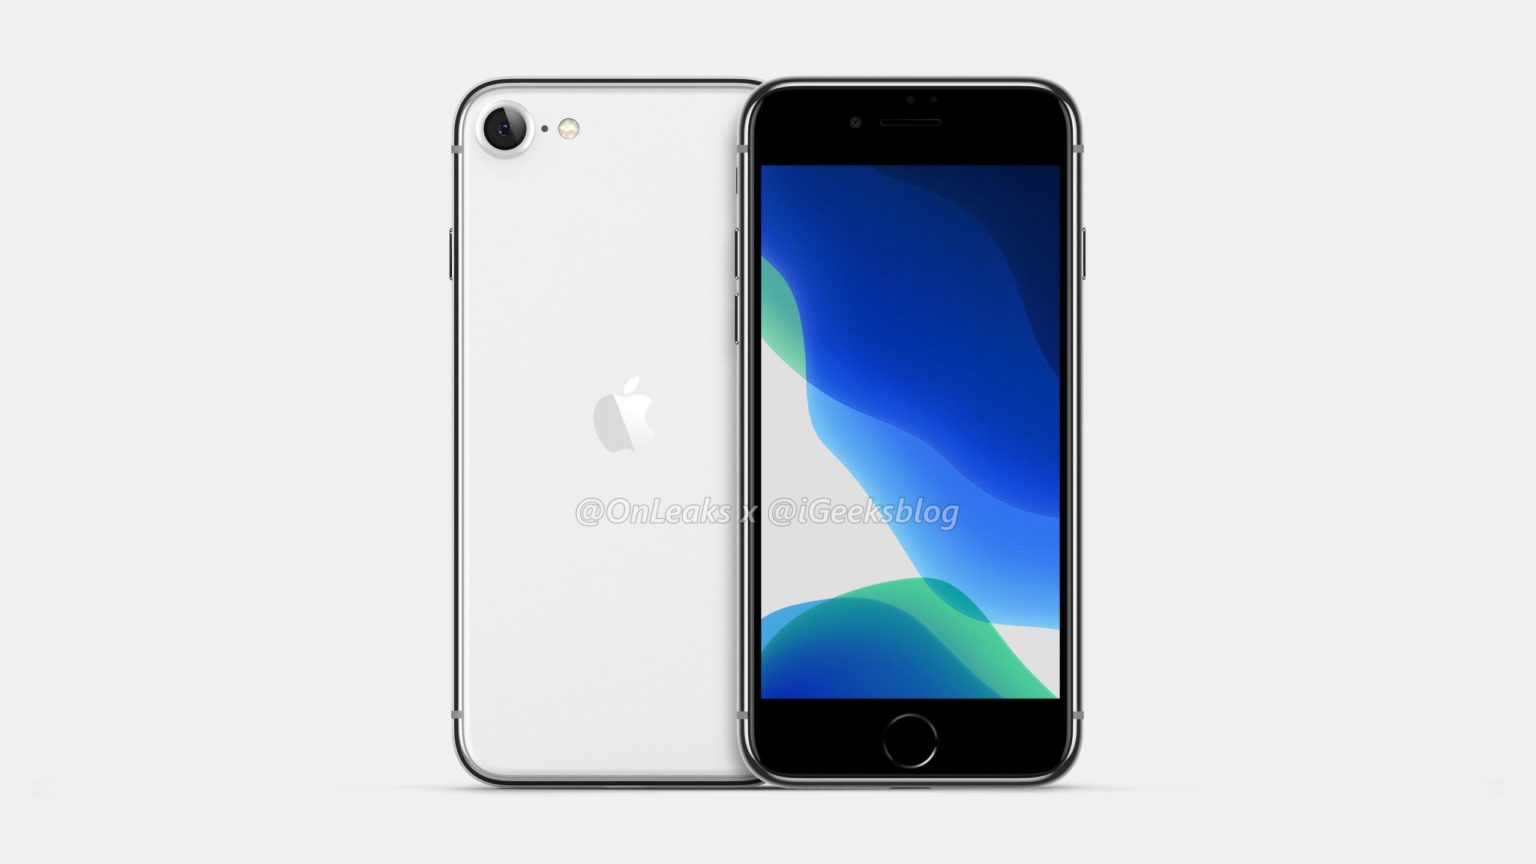 2020-iPhone-SE-2-4.7-LCD-display-scaled-1-1536x864.jpg